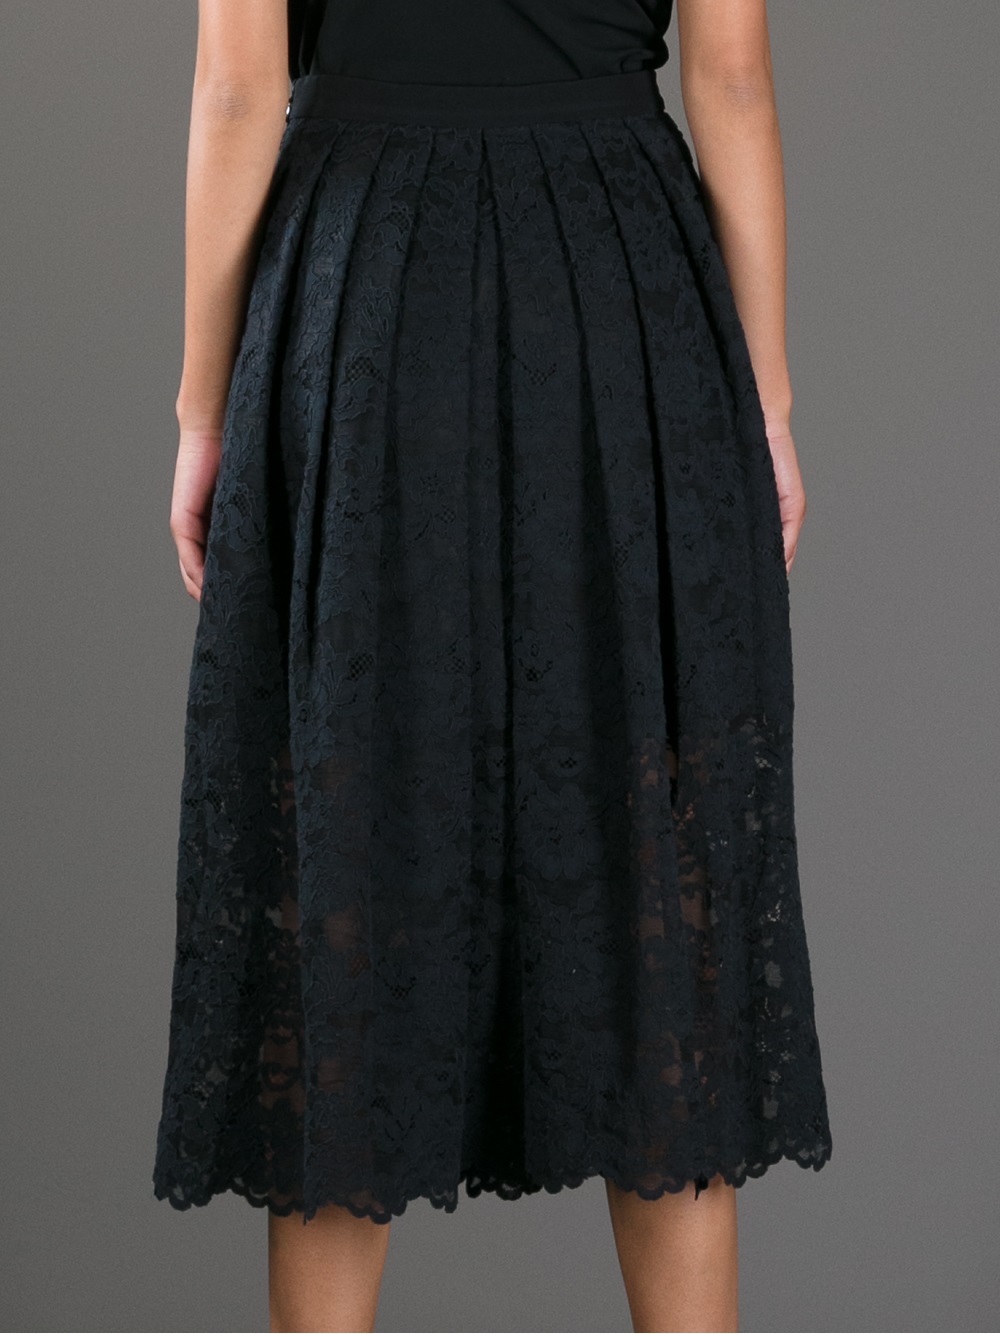 Tibi Lace Overlay Midi Skirt in Black - Lyst